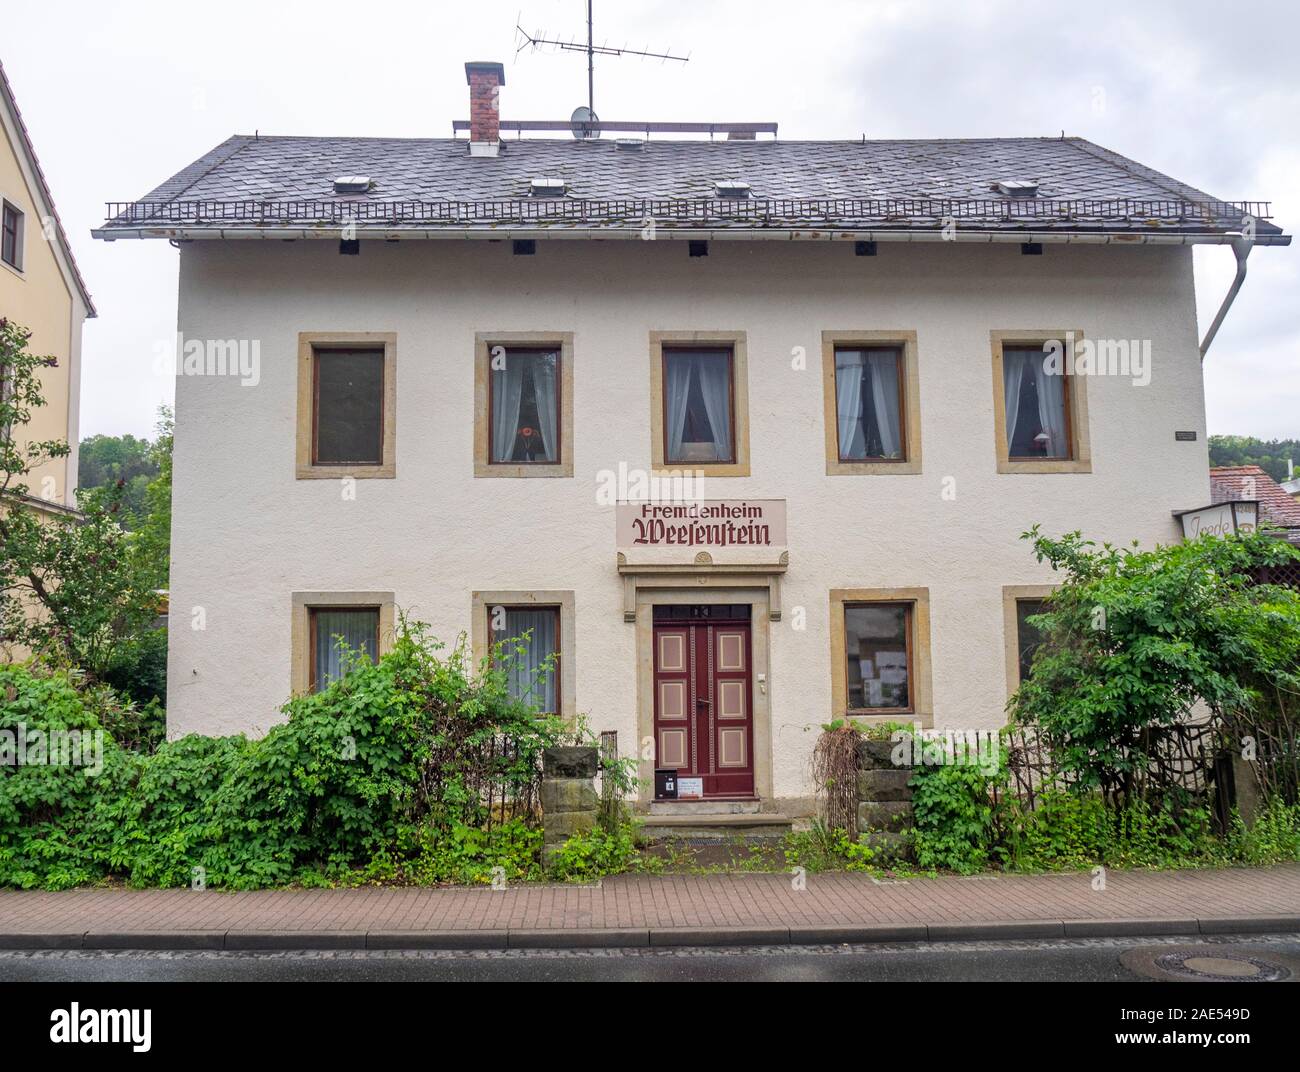 Hostel hotel accommodation in spa town Bad Schandau Saxony Germany. Stock Photo